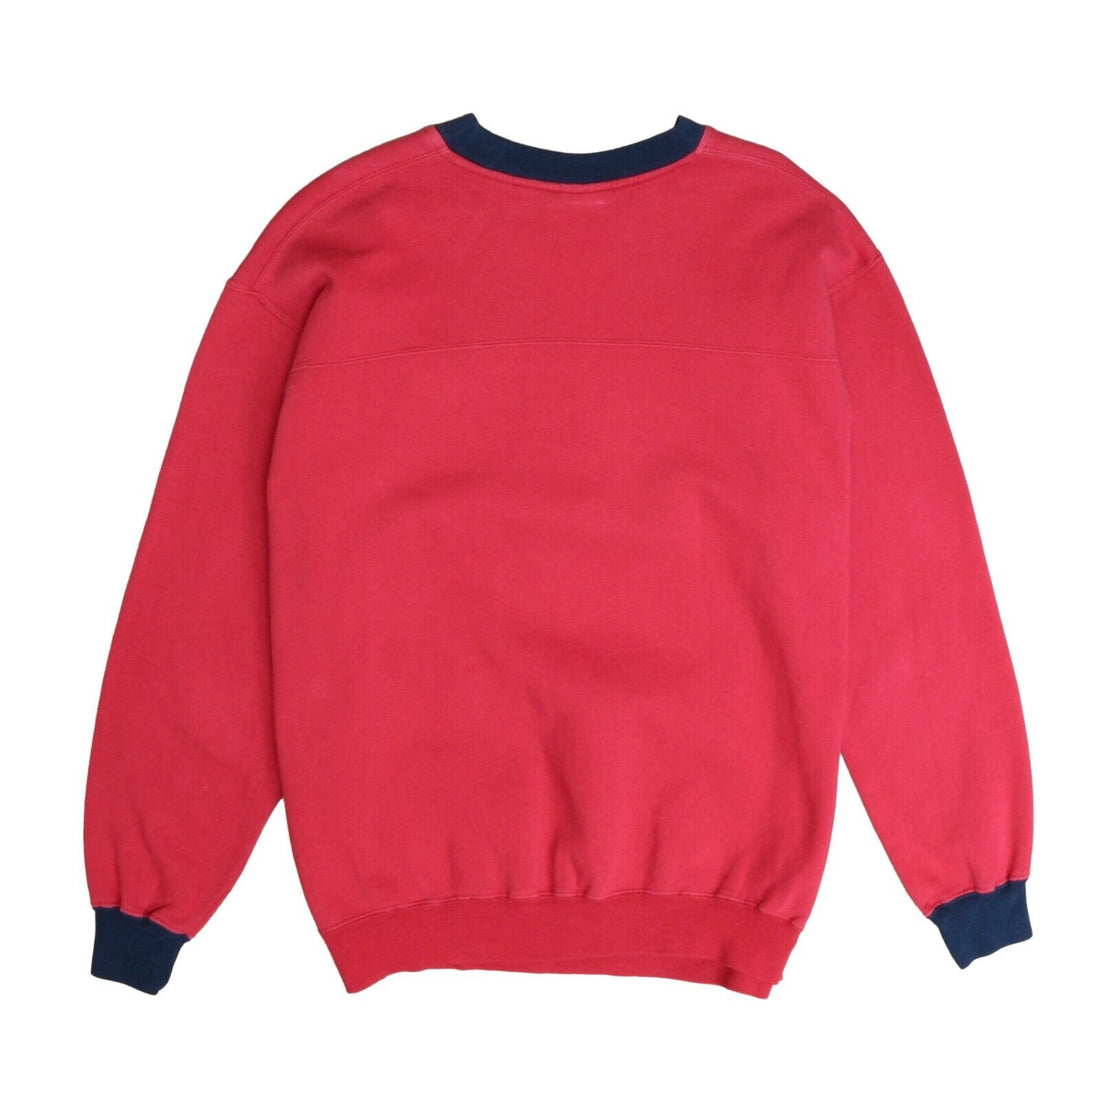 Vintage Nebraska Cornhuskers Sweatshirt Crewneck Size Large Red NCAA